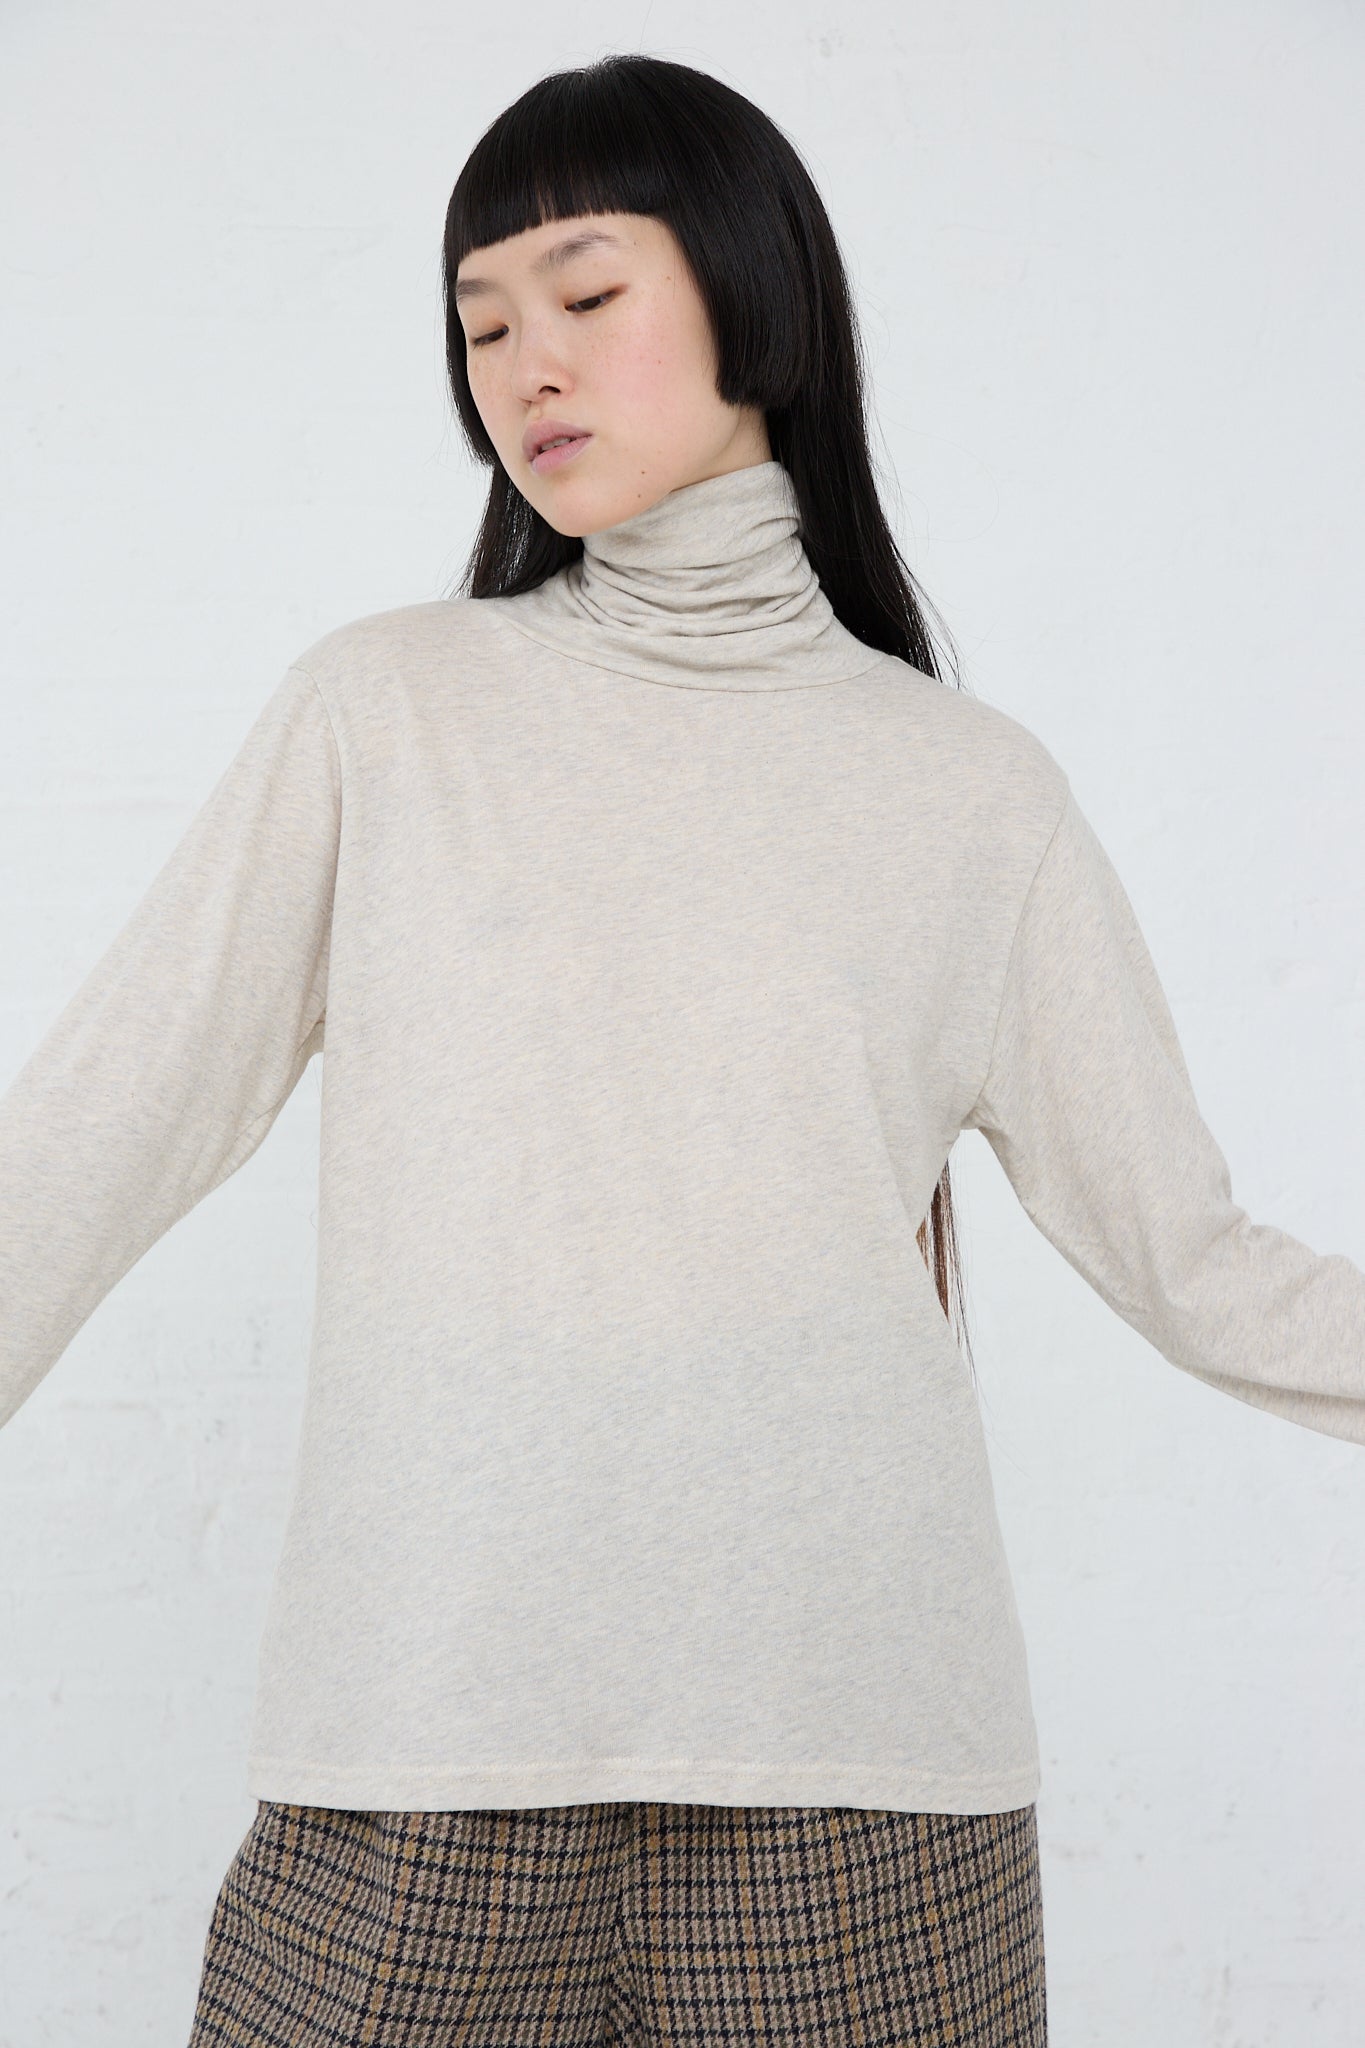 The model is wearing a long sleeve Cotton Knit Turtleneck in Oatmeal turtleneck by Ichi.